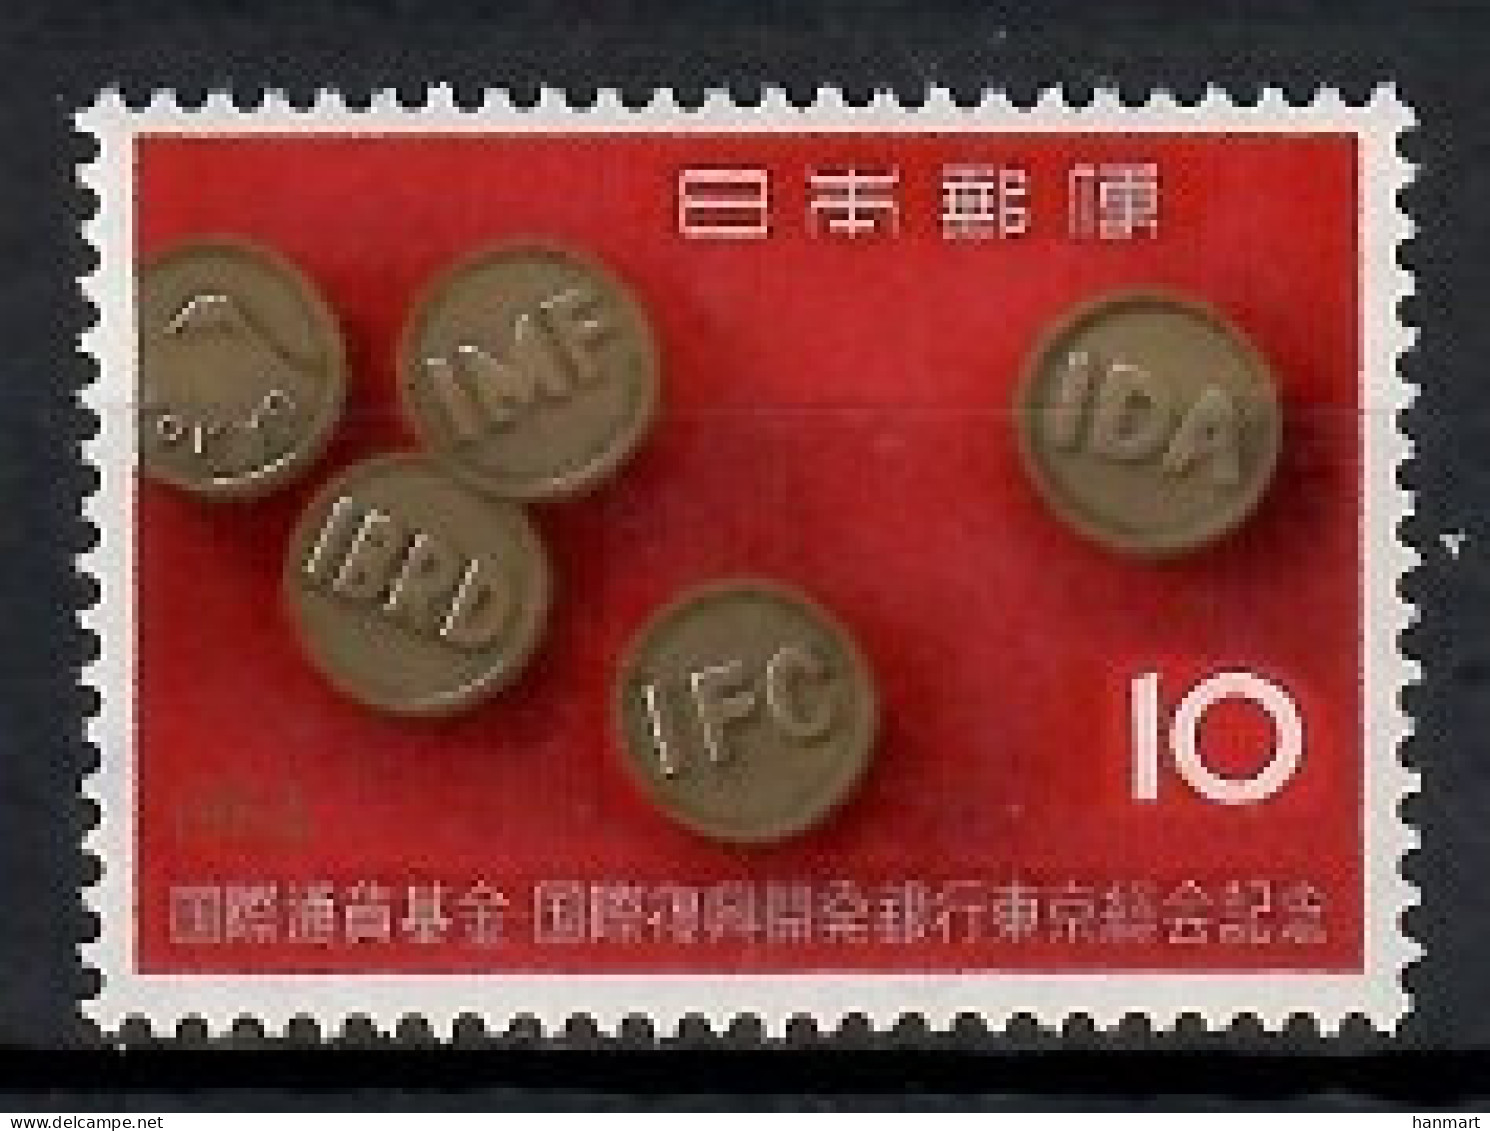 Japan 1964 Mi 868 MNH  (ZS9 JPN868) - Monnaies